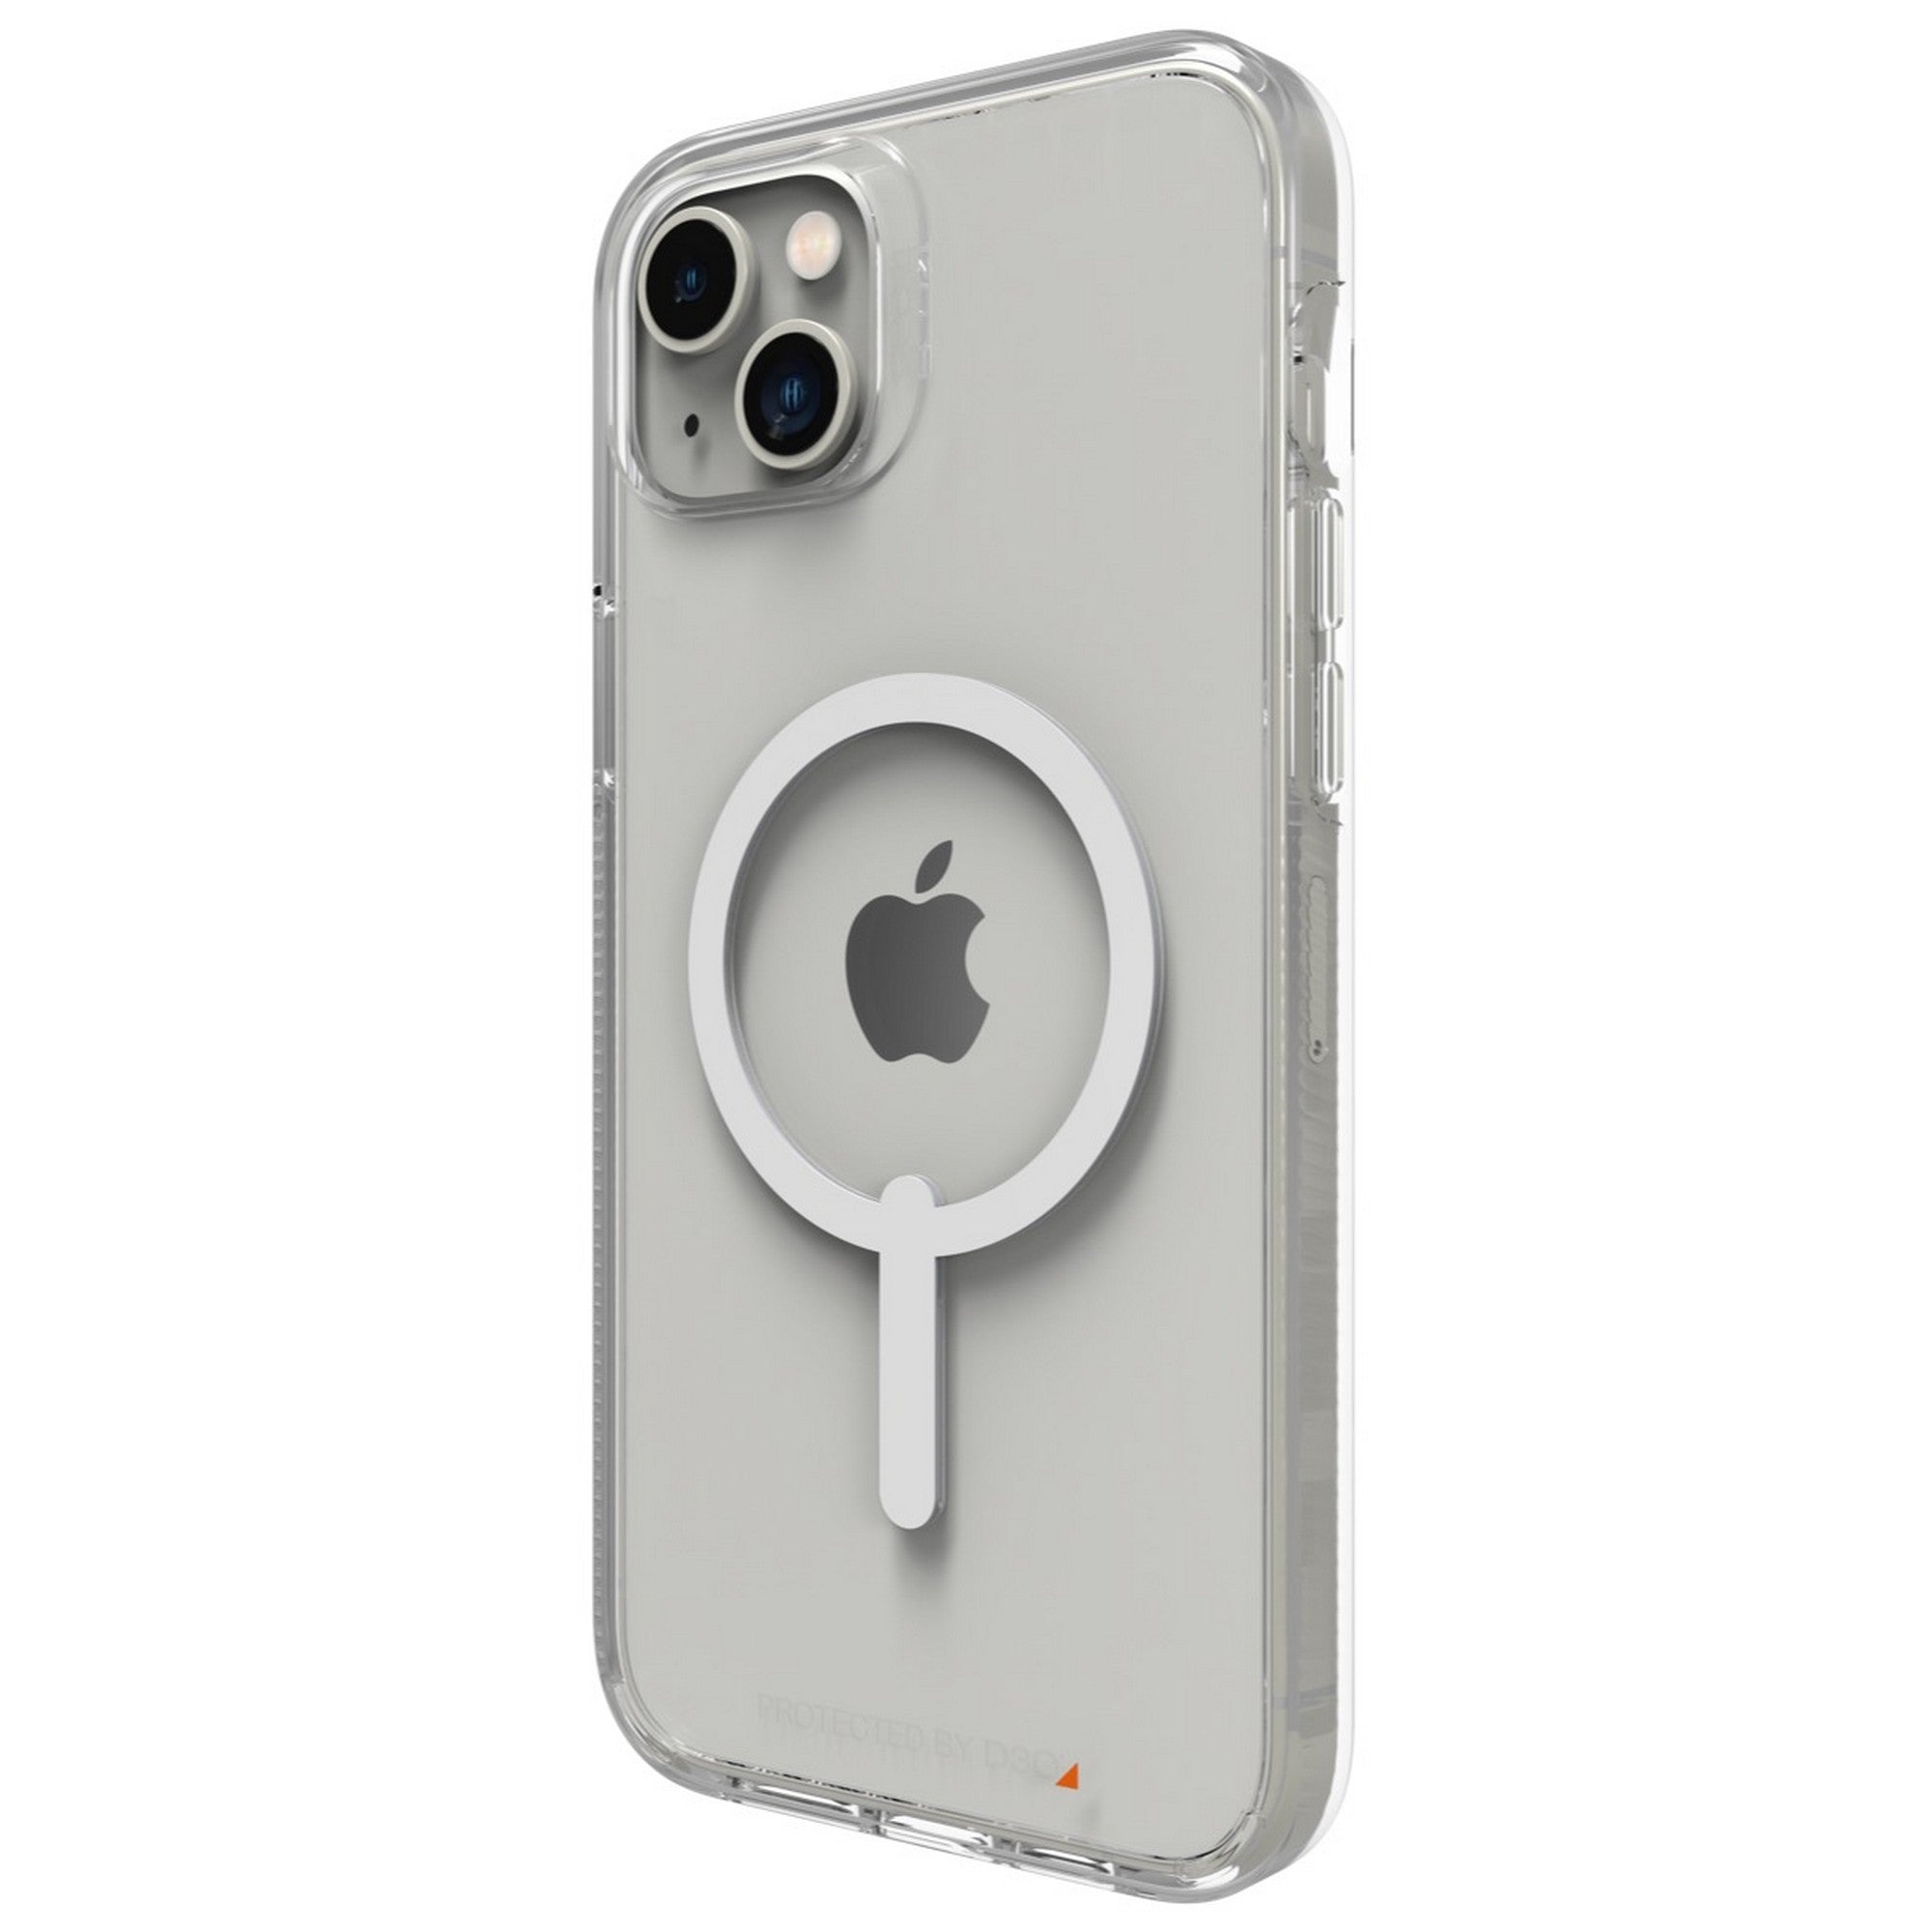 Carcasa Completa Apple iPhone Xs Max Blanco (sin garantía sin devolución)